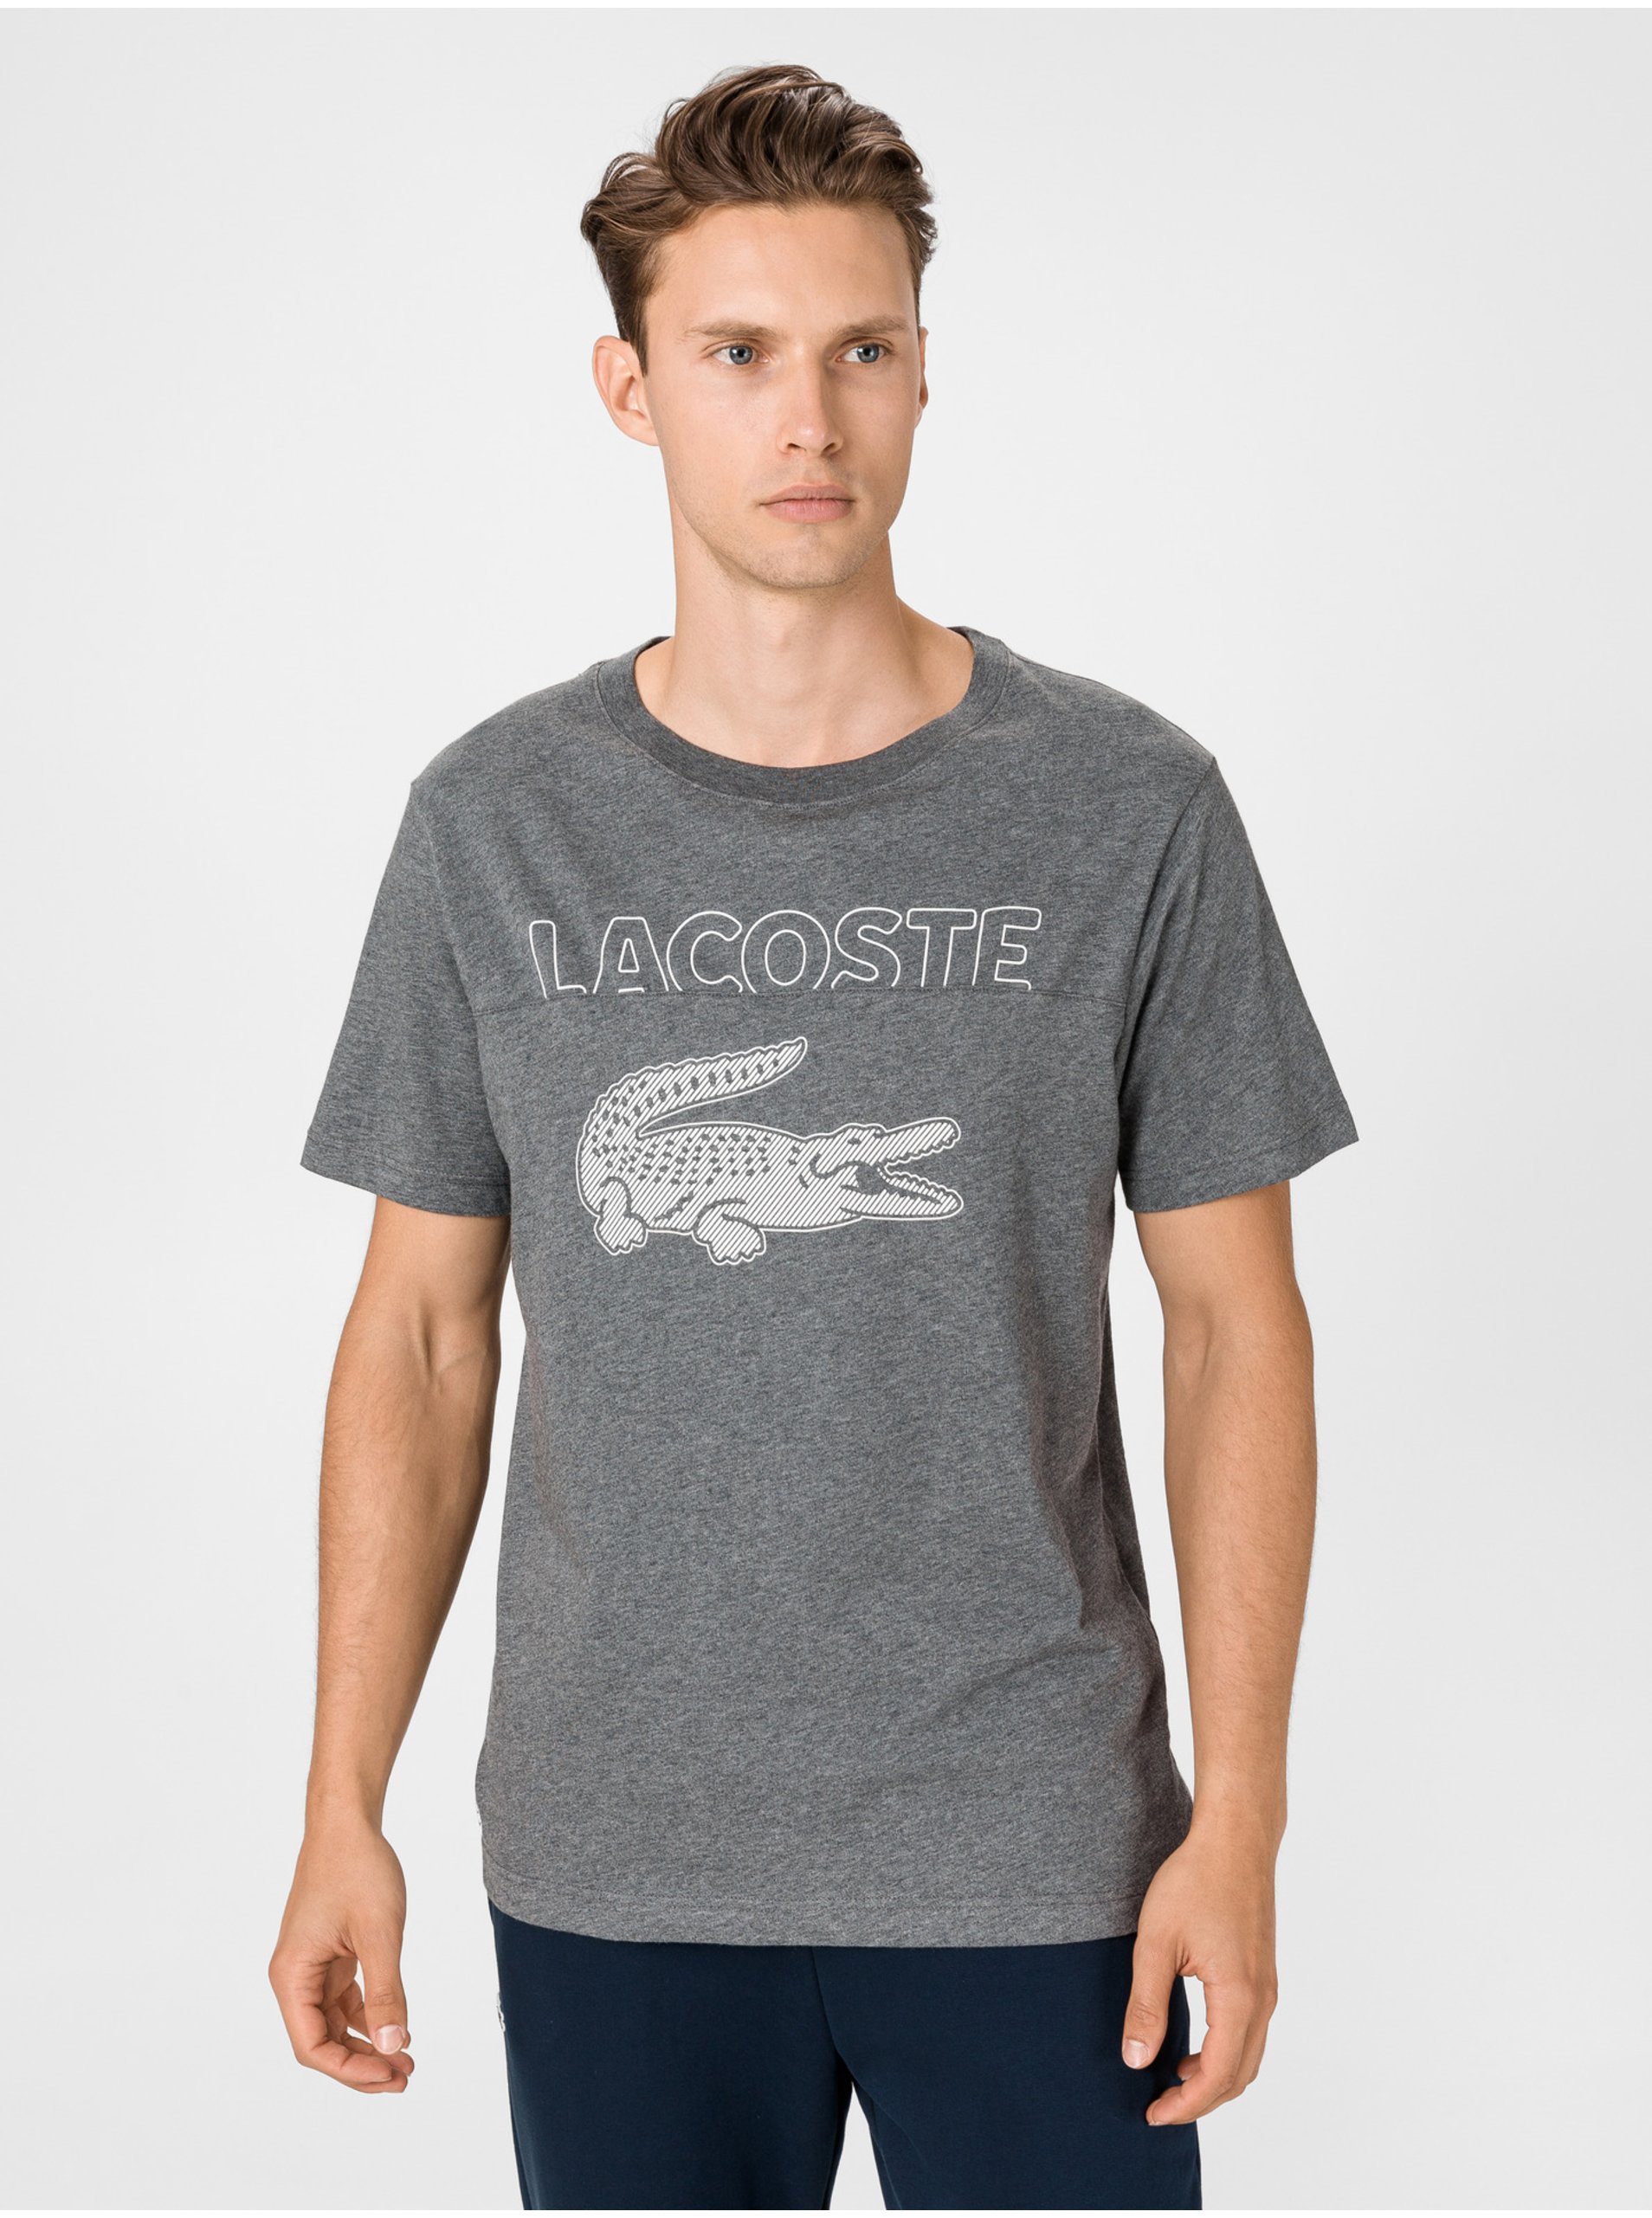 Tričko Lacoste - Muži